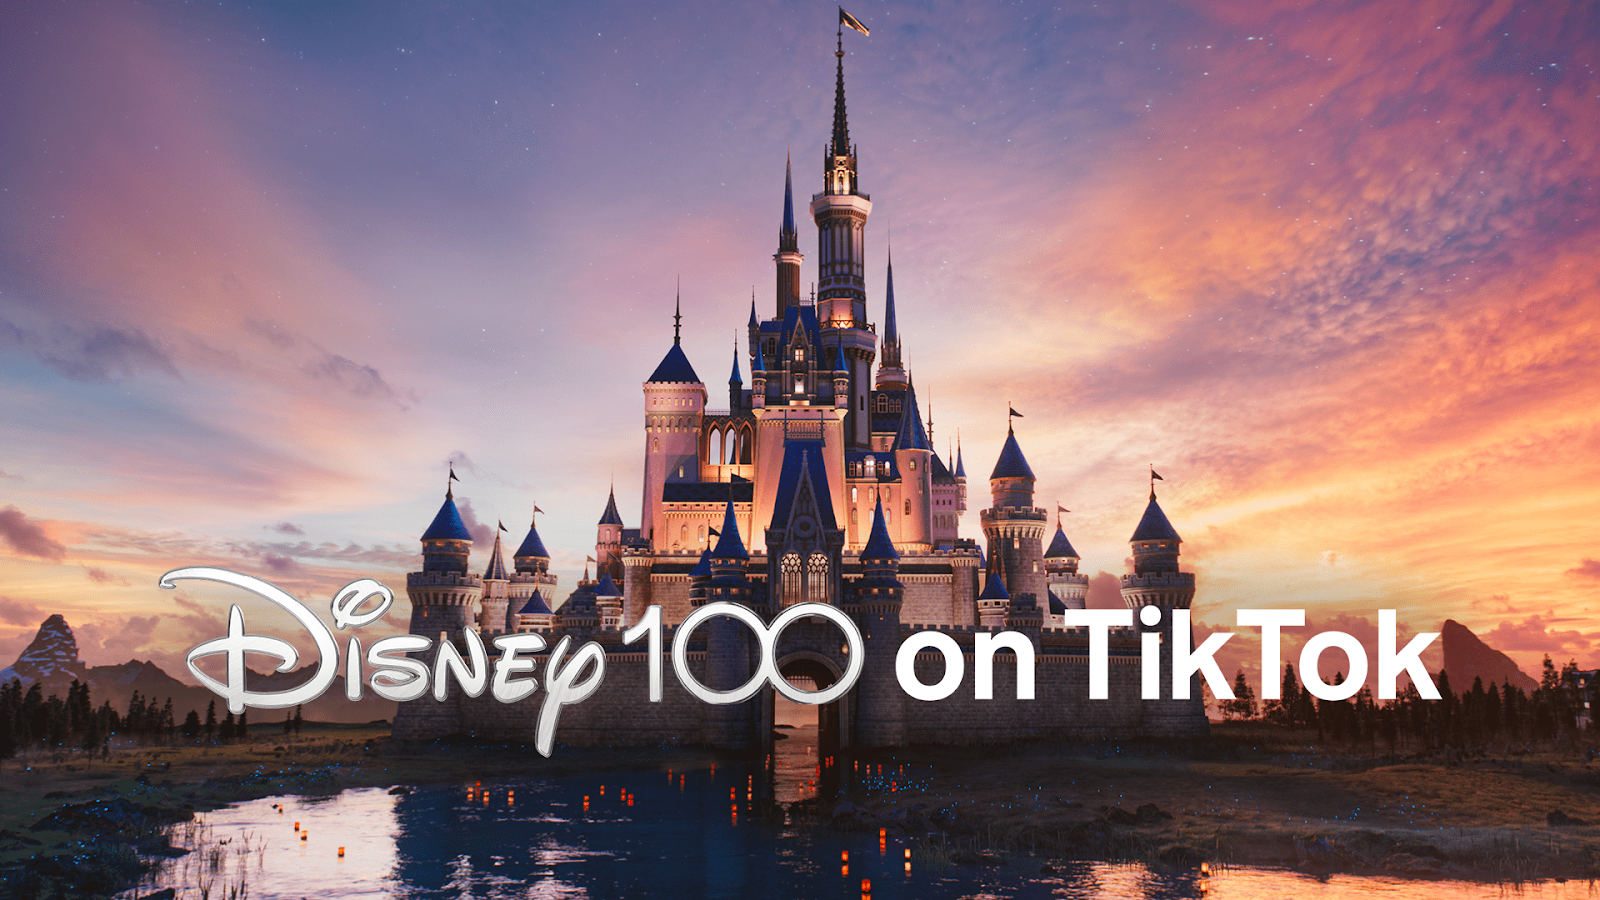 Disney: Disney100 on TikTok campaign